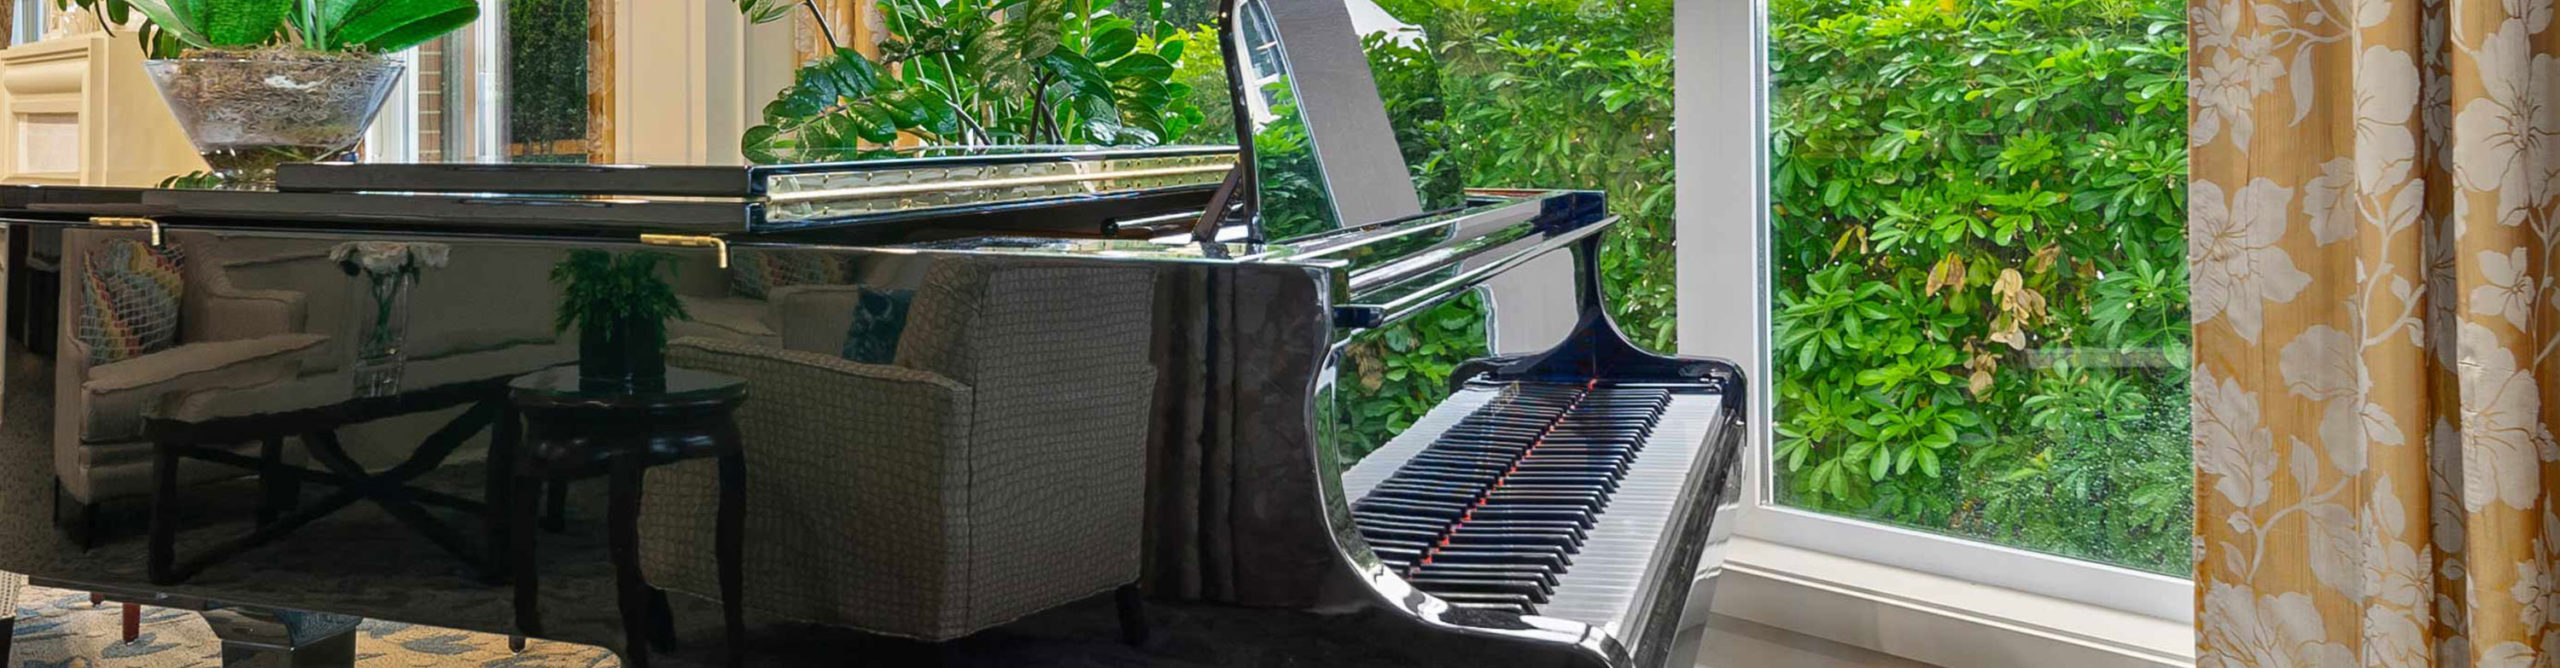 Sunridge Gardens Grand Piano